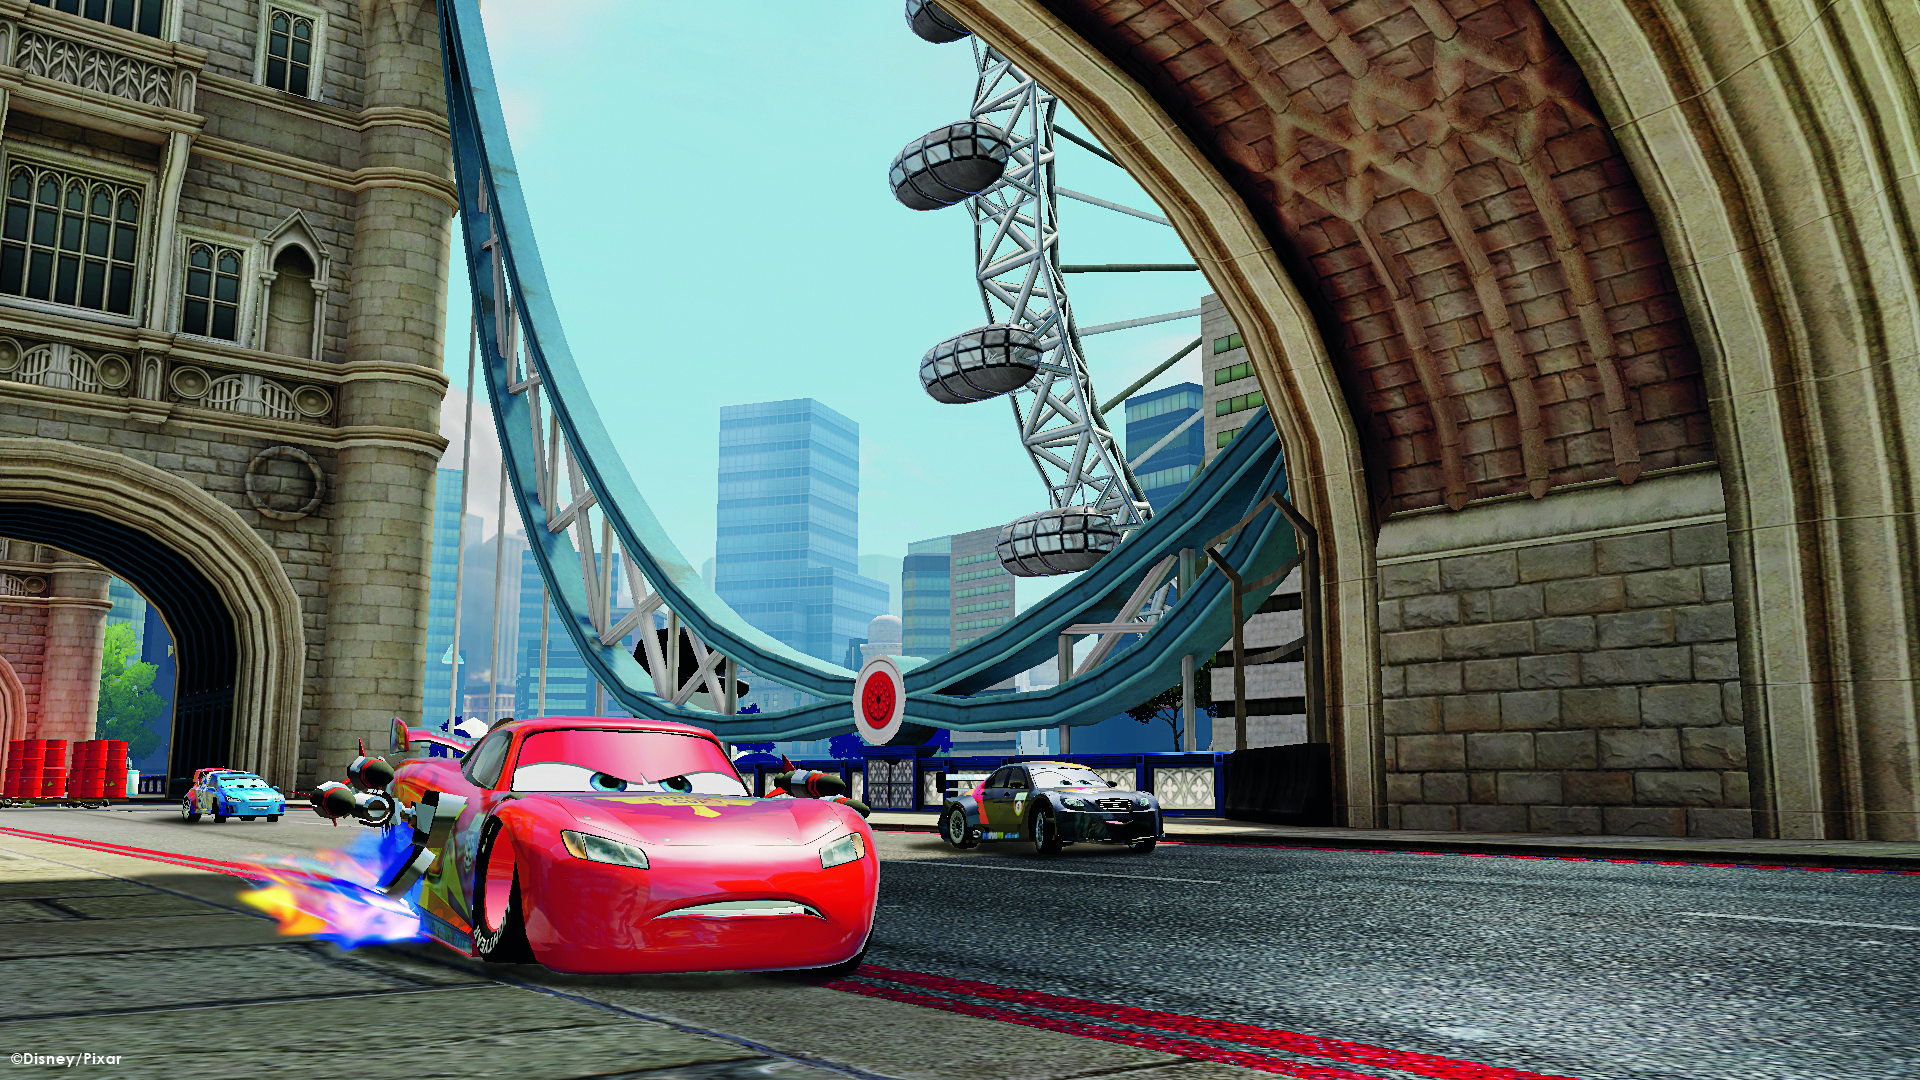 DisneyPixar Cars 2 The Video Game Images 